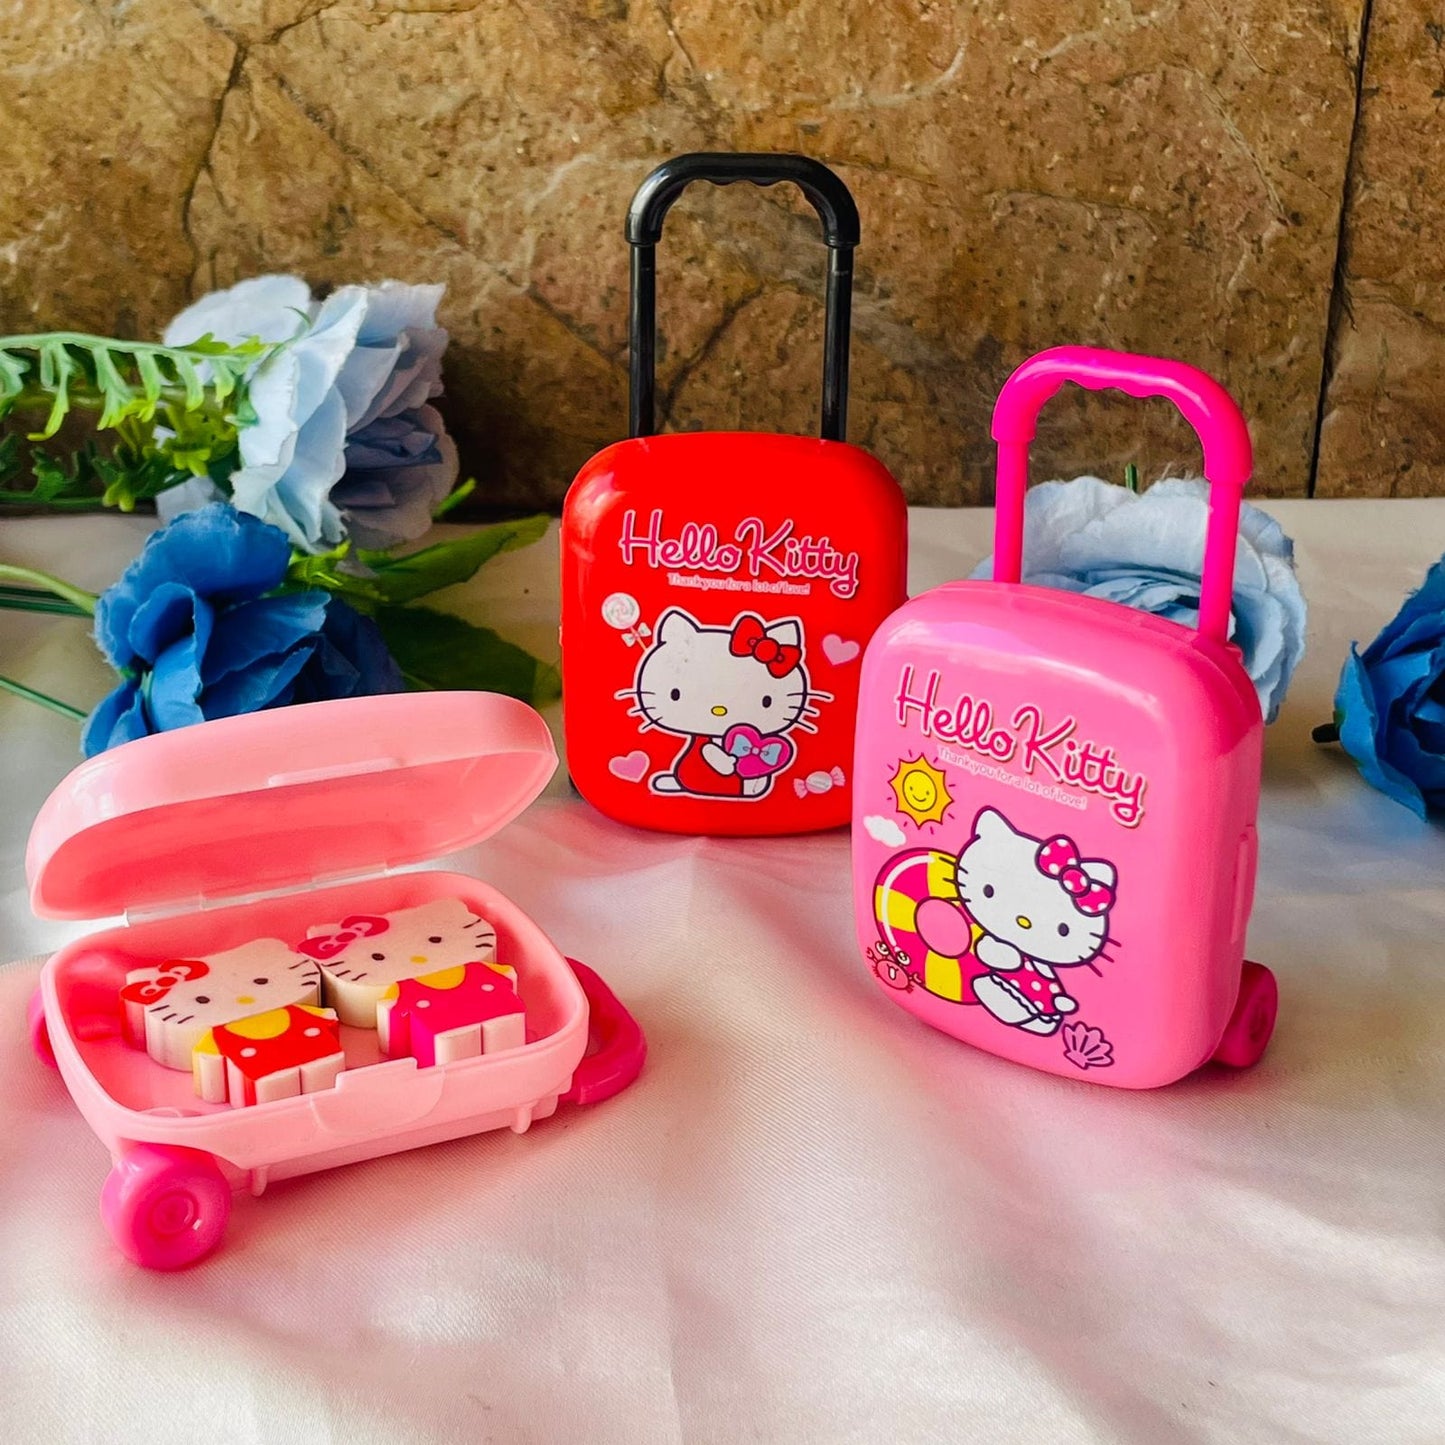 Hello Kitty Eraser set of 2 in cute Trolley